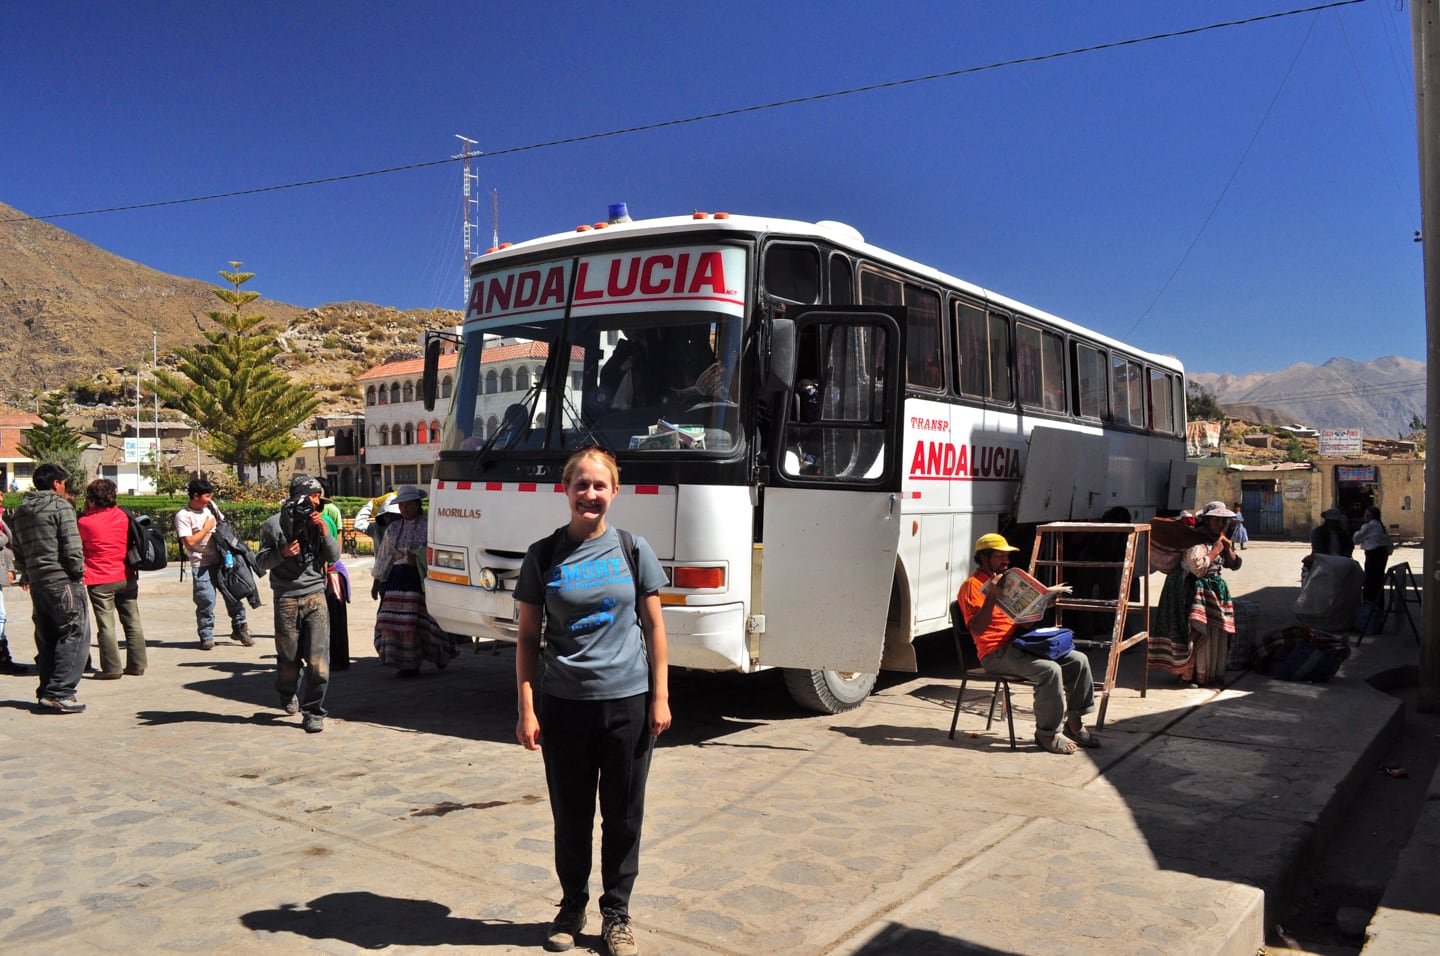 Andalucia bus at Cabanaconde Colca Canyon trek